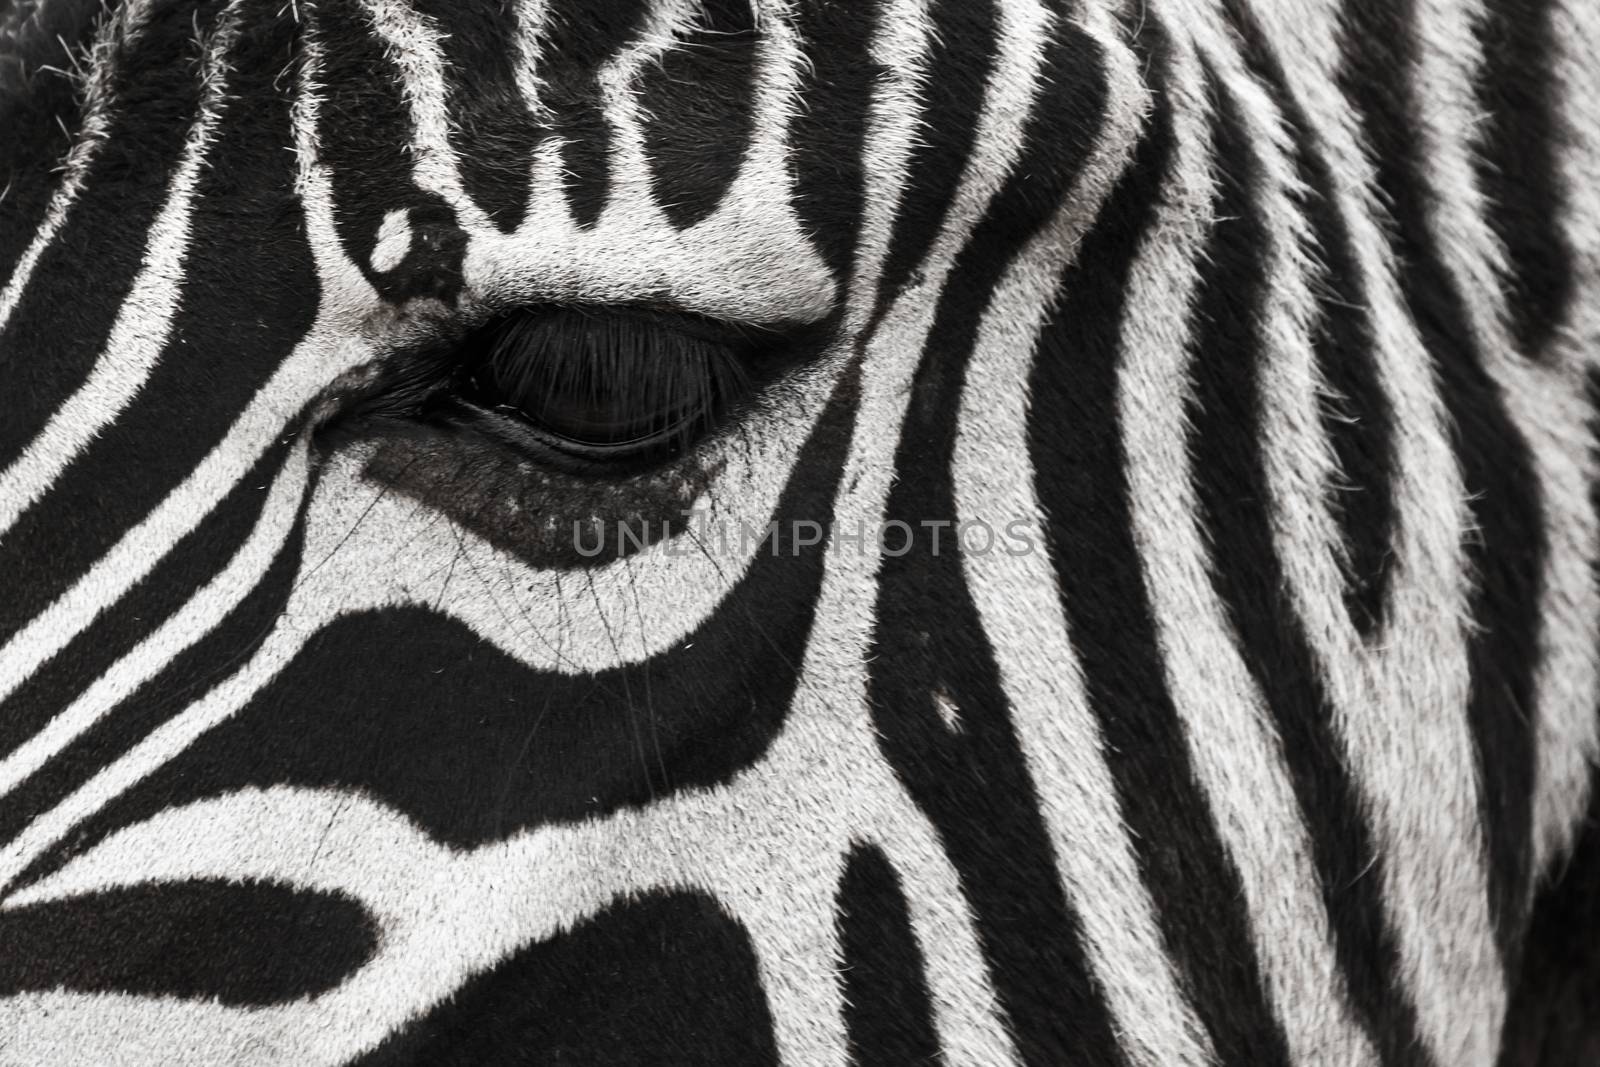 A zebra face up close. Makes a nice background.